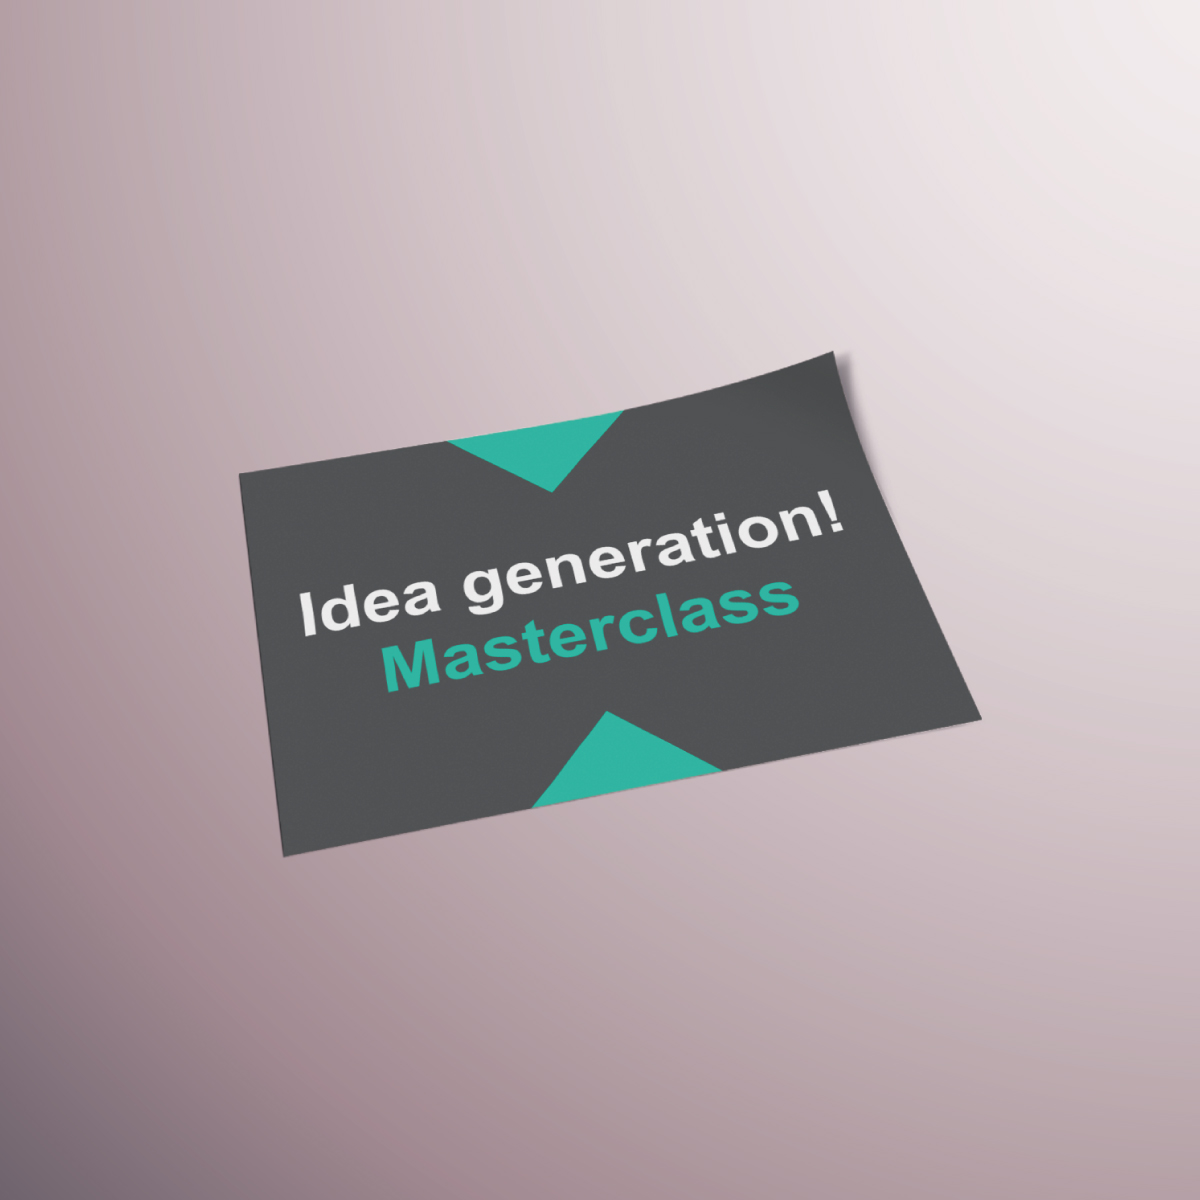 Uca idea generation masterclass by viviane williams